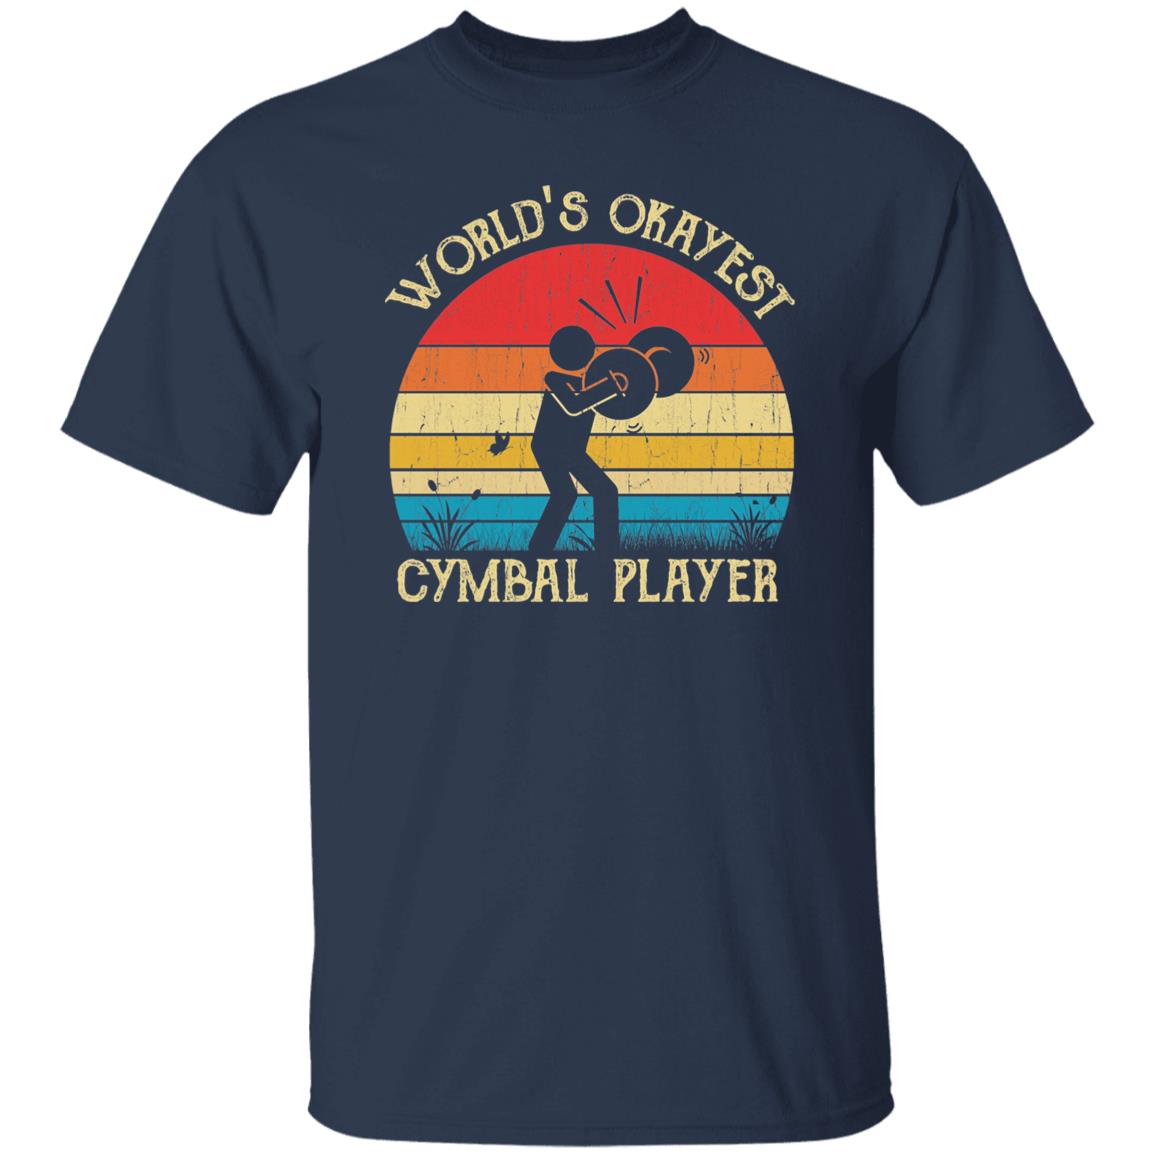 World's Okayest Cymbal player Retro Style Unisex T-shirt Black Navy Dark Heather-Navy-Family-Gift-Planet